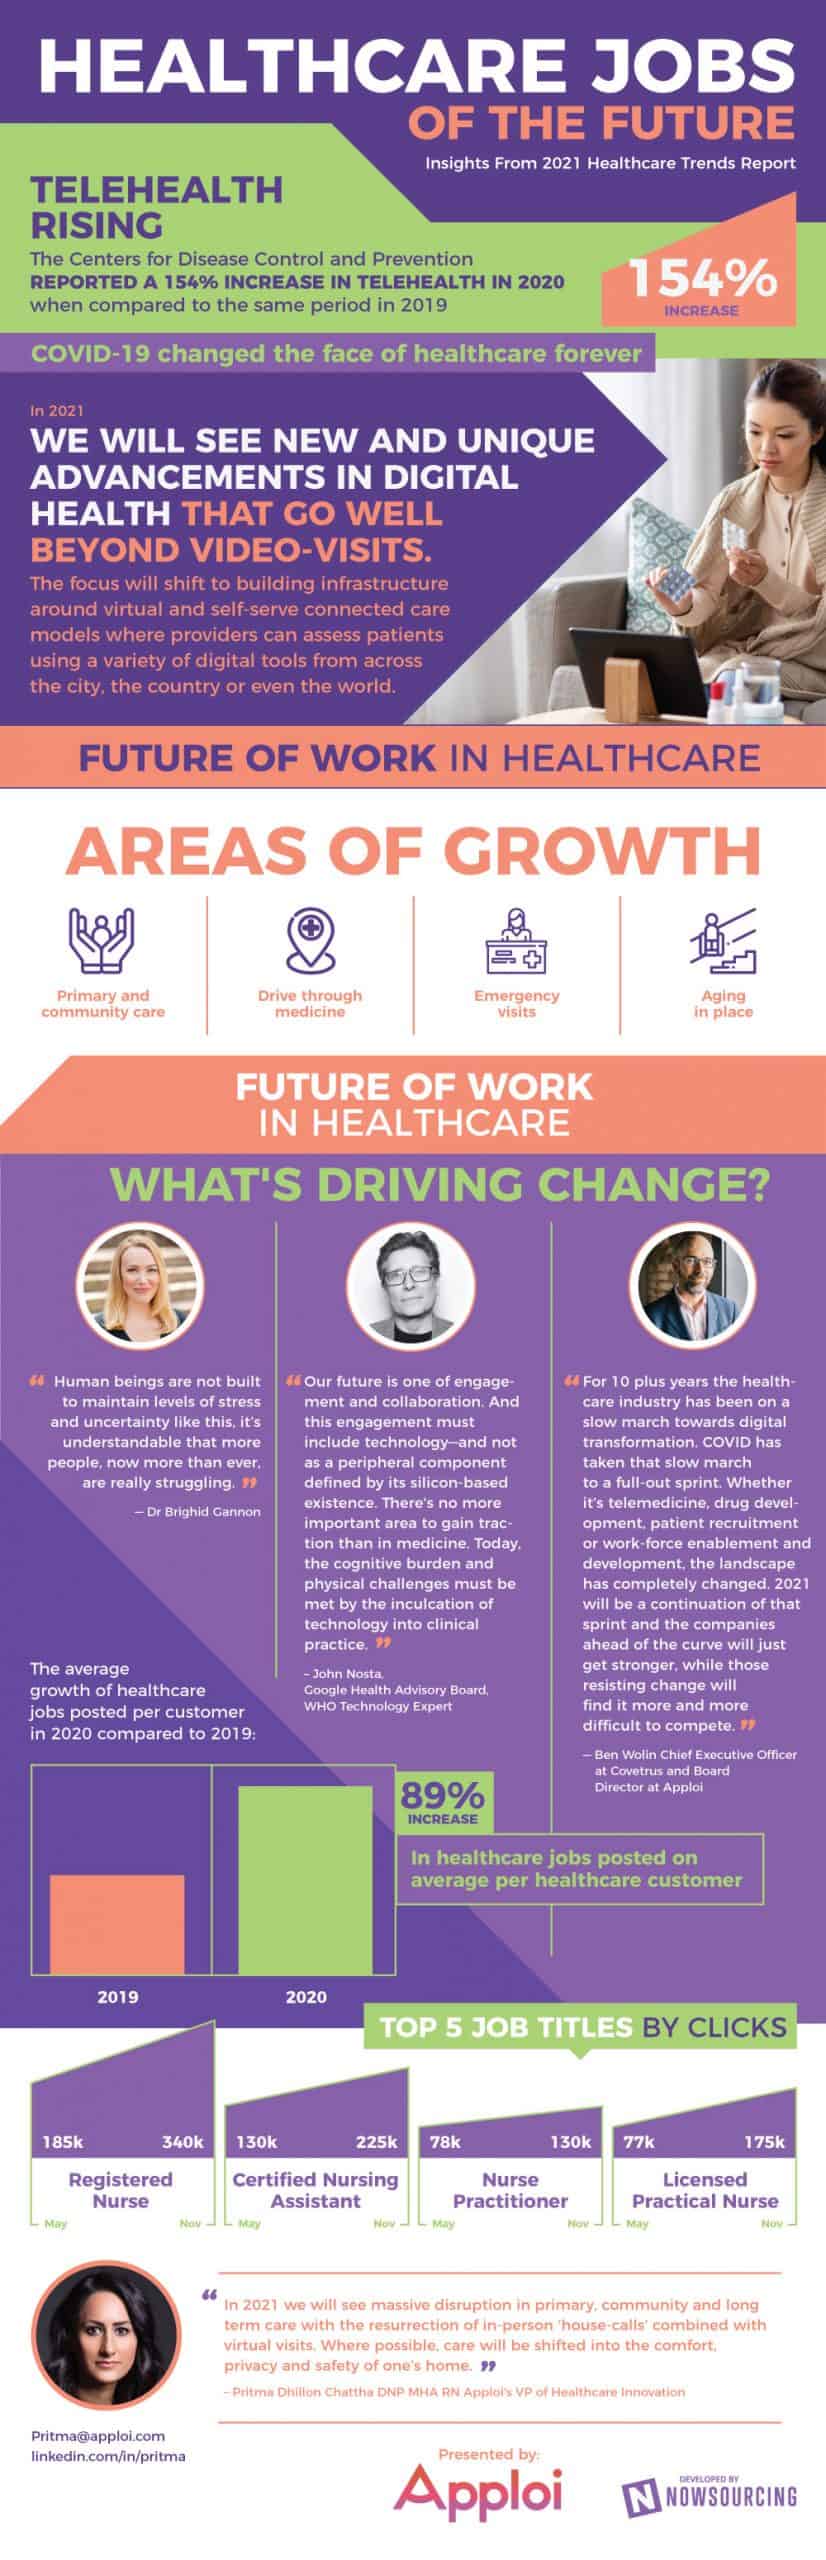 Healthcare Jobs of the Future